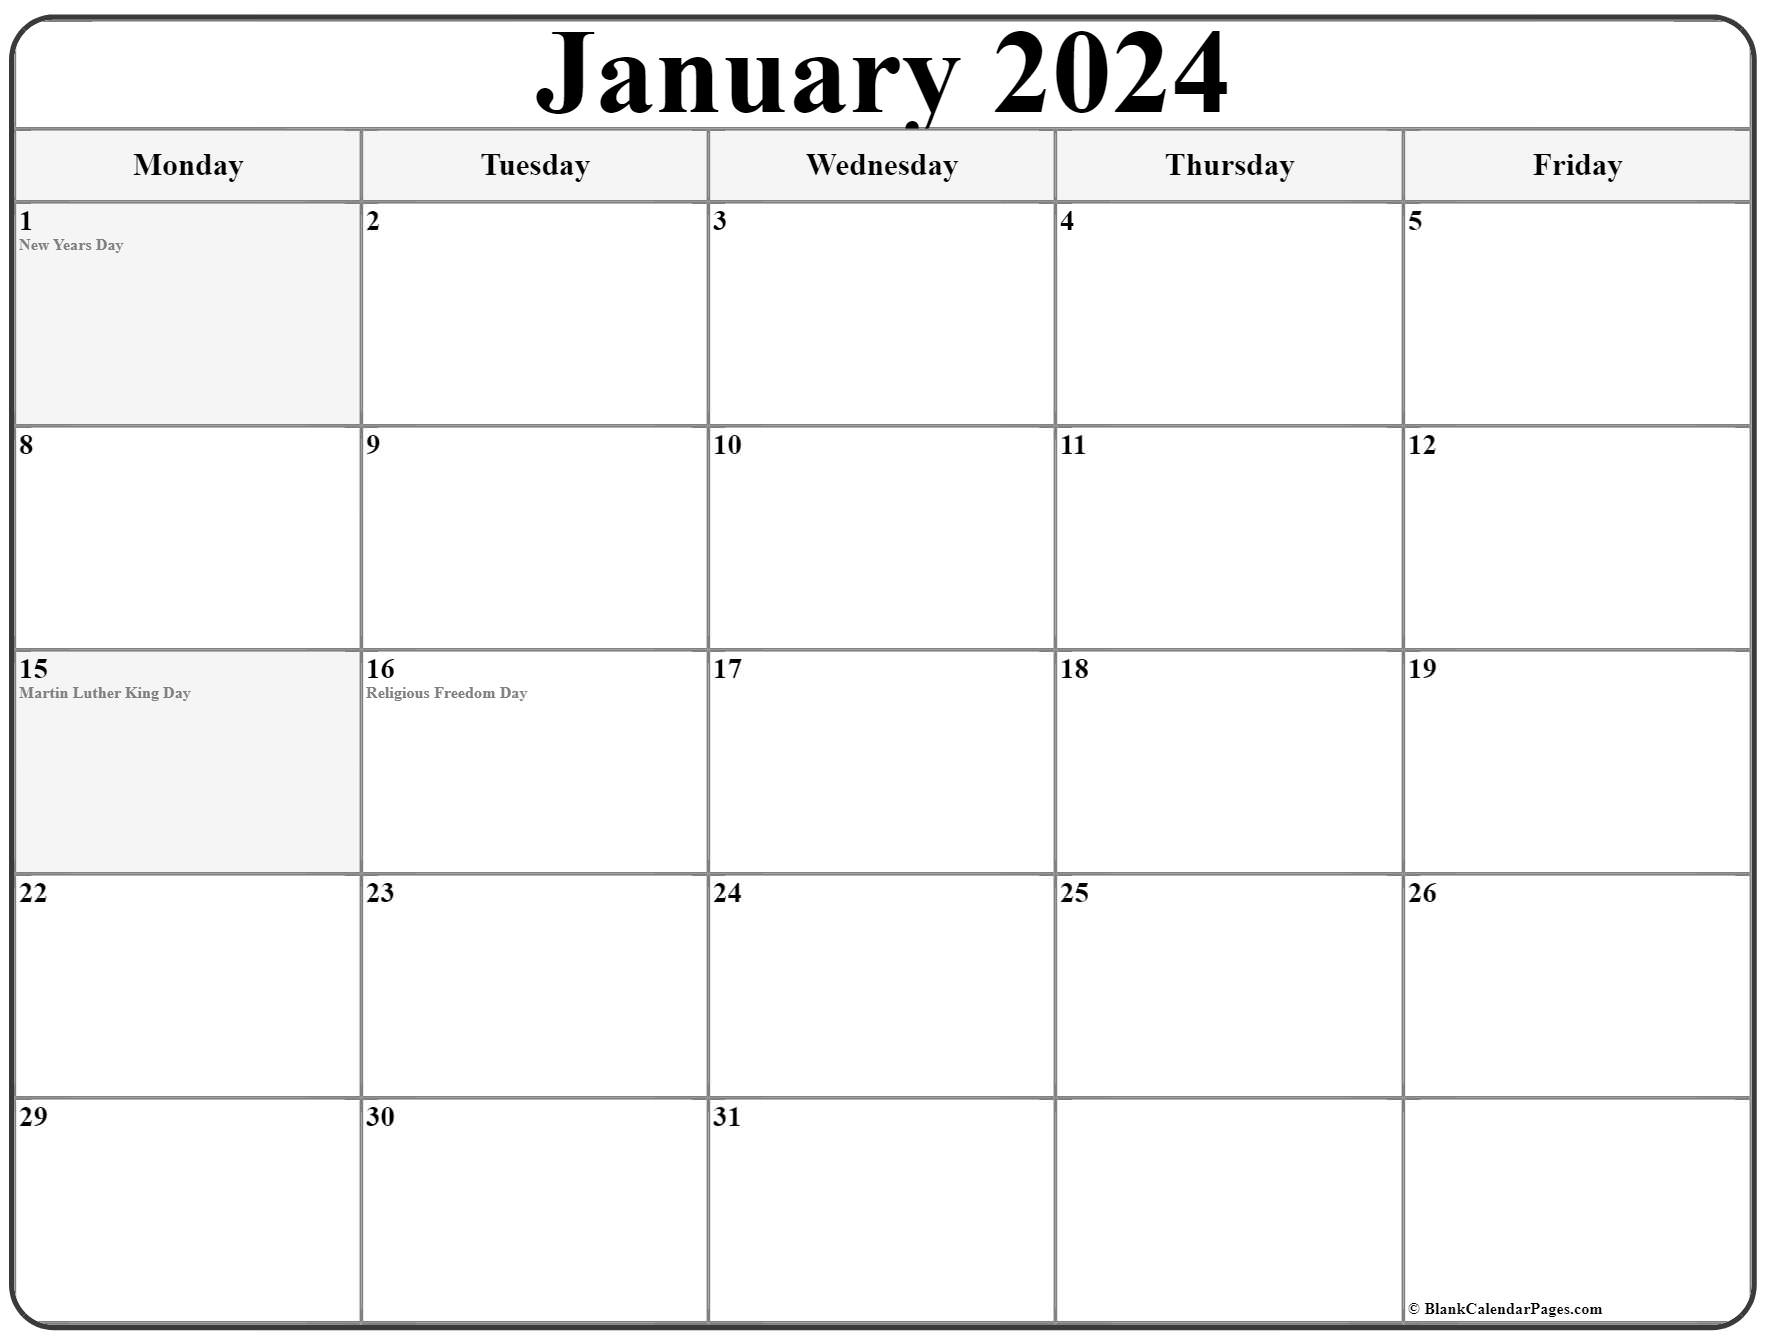 January 2024 Monday Calendar | Monday To Sunday intended for Free Printable Calendar 2024 Monday Through Friday